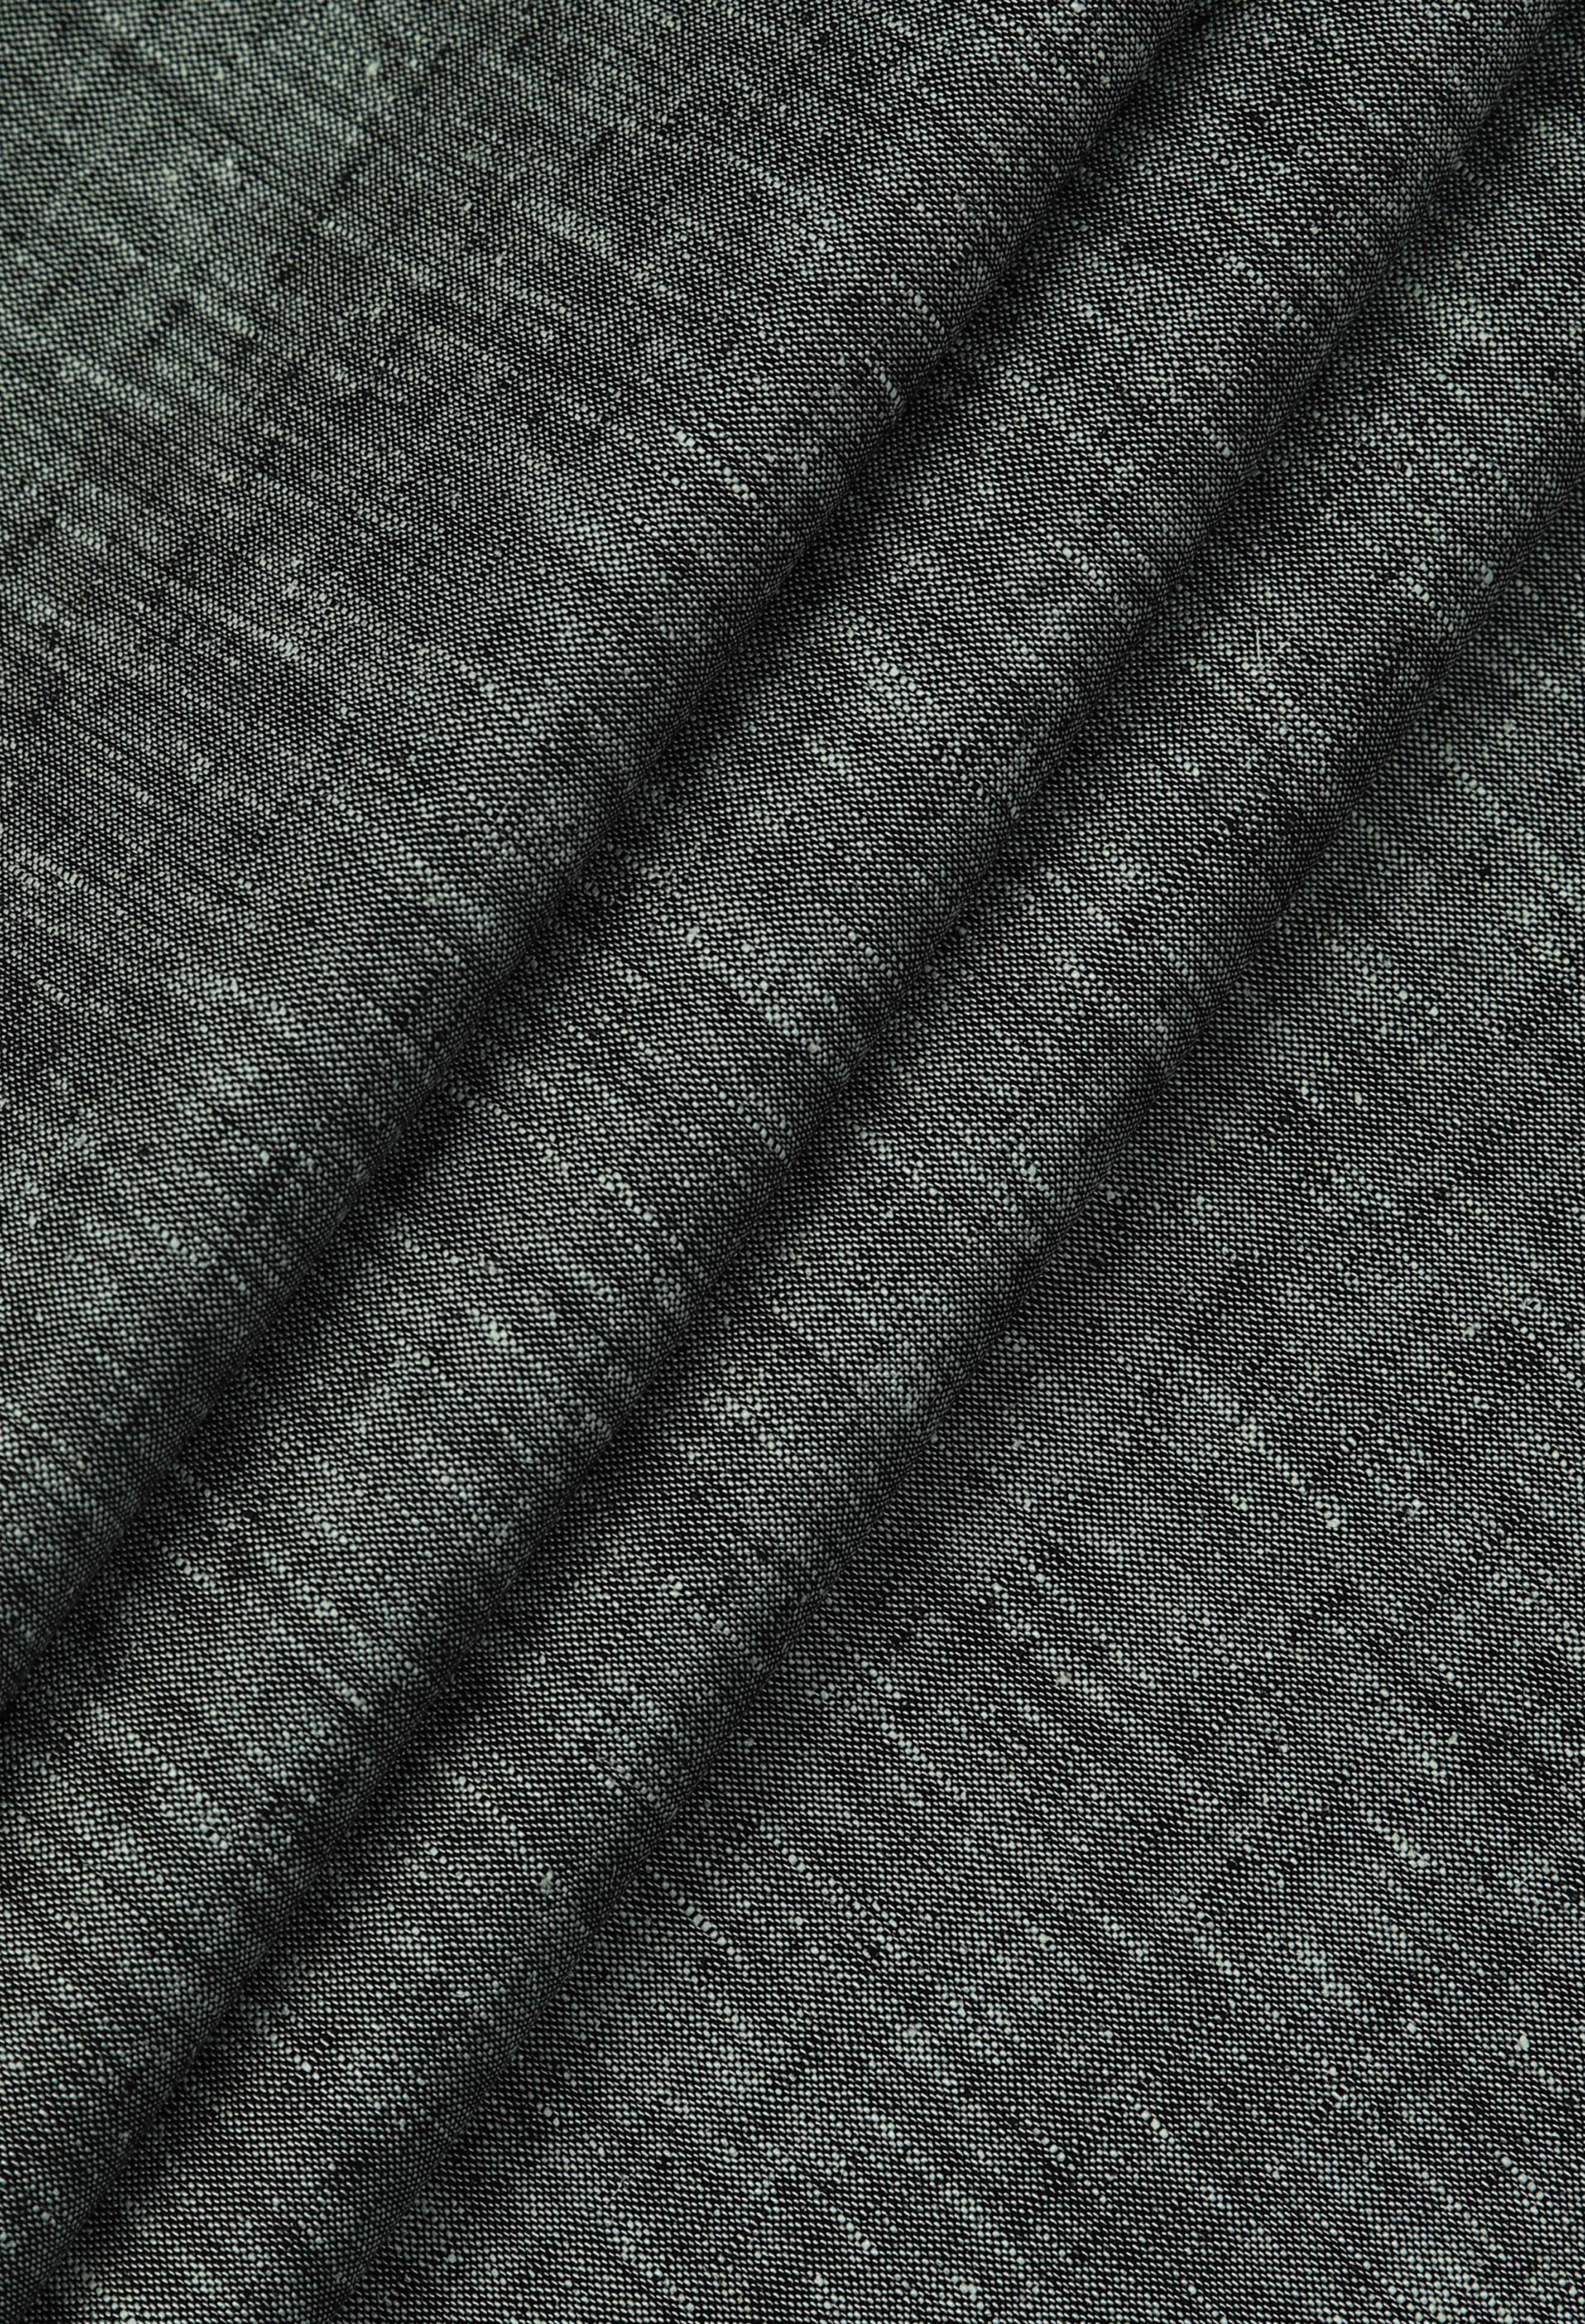 Charcoal Grey linen (TH-000673)